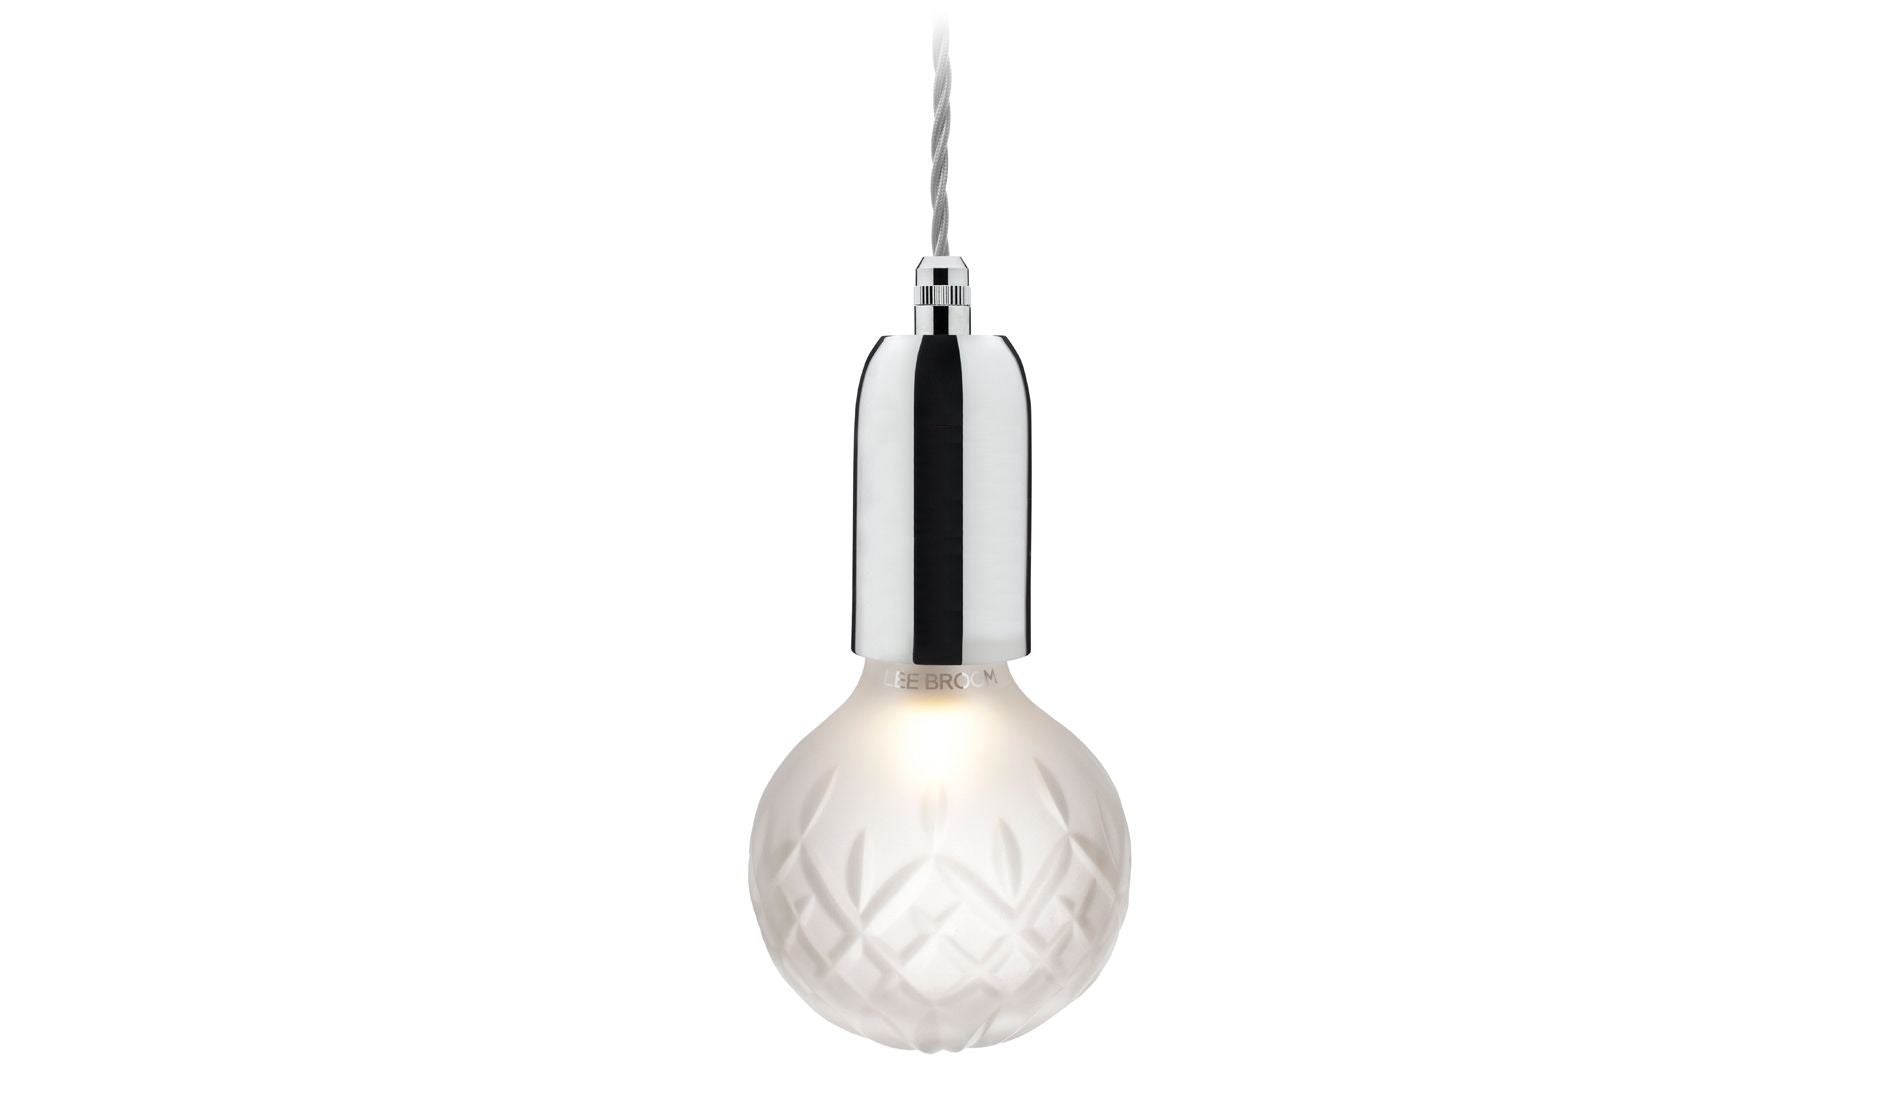 Lee Broom - Crystal Bulb Hanglamp chroom